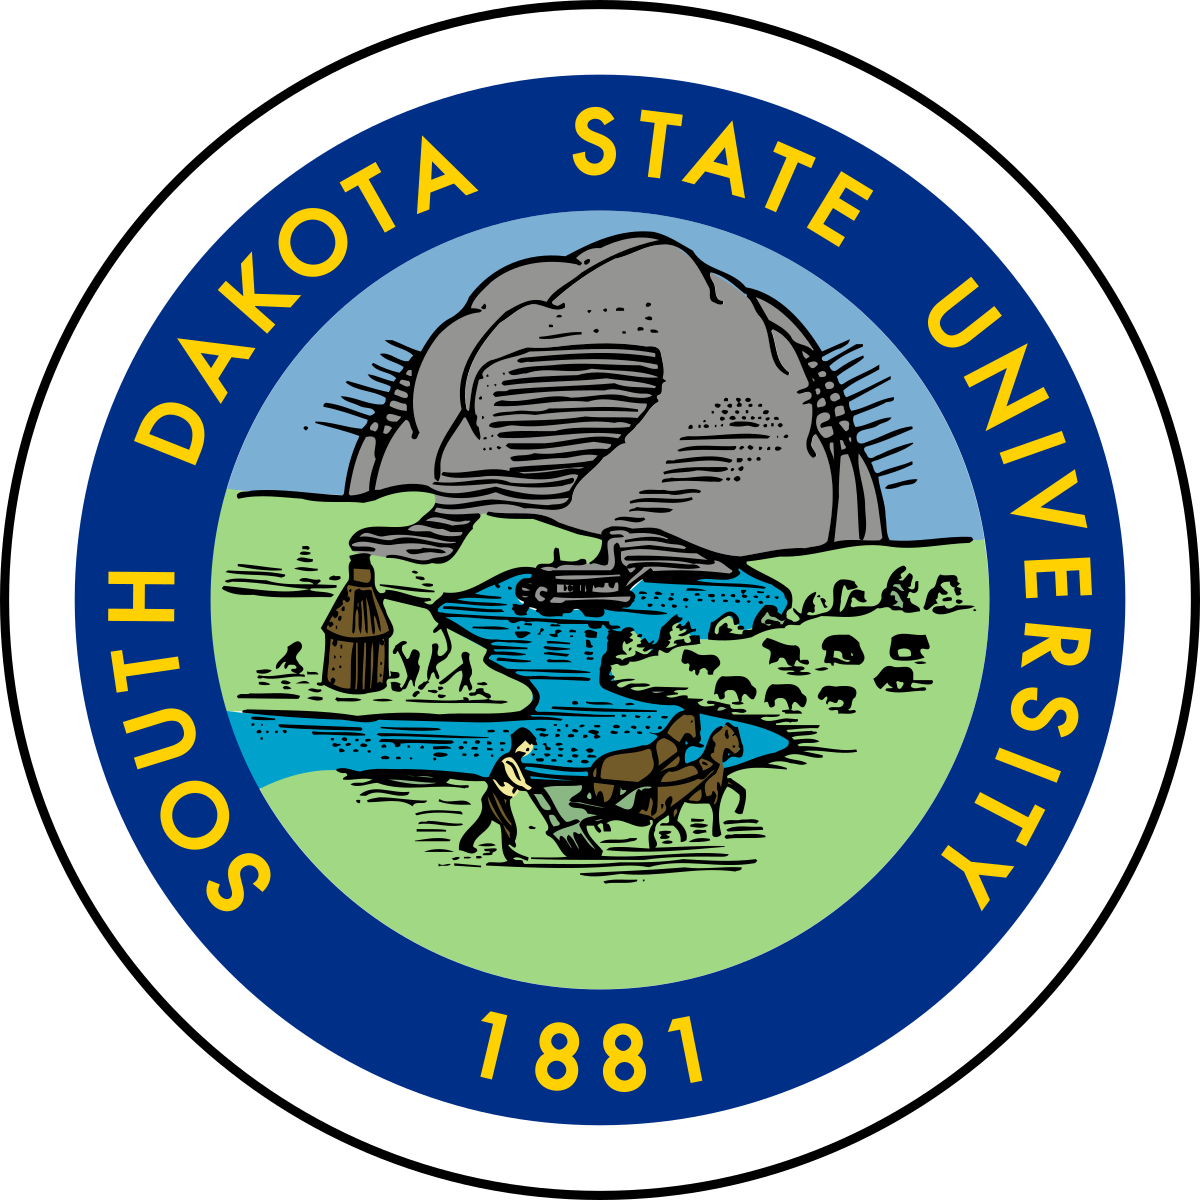 South Dakota State Seal (1200x1200)